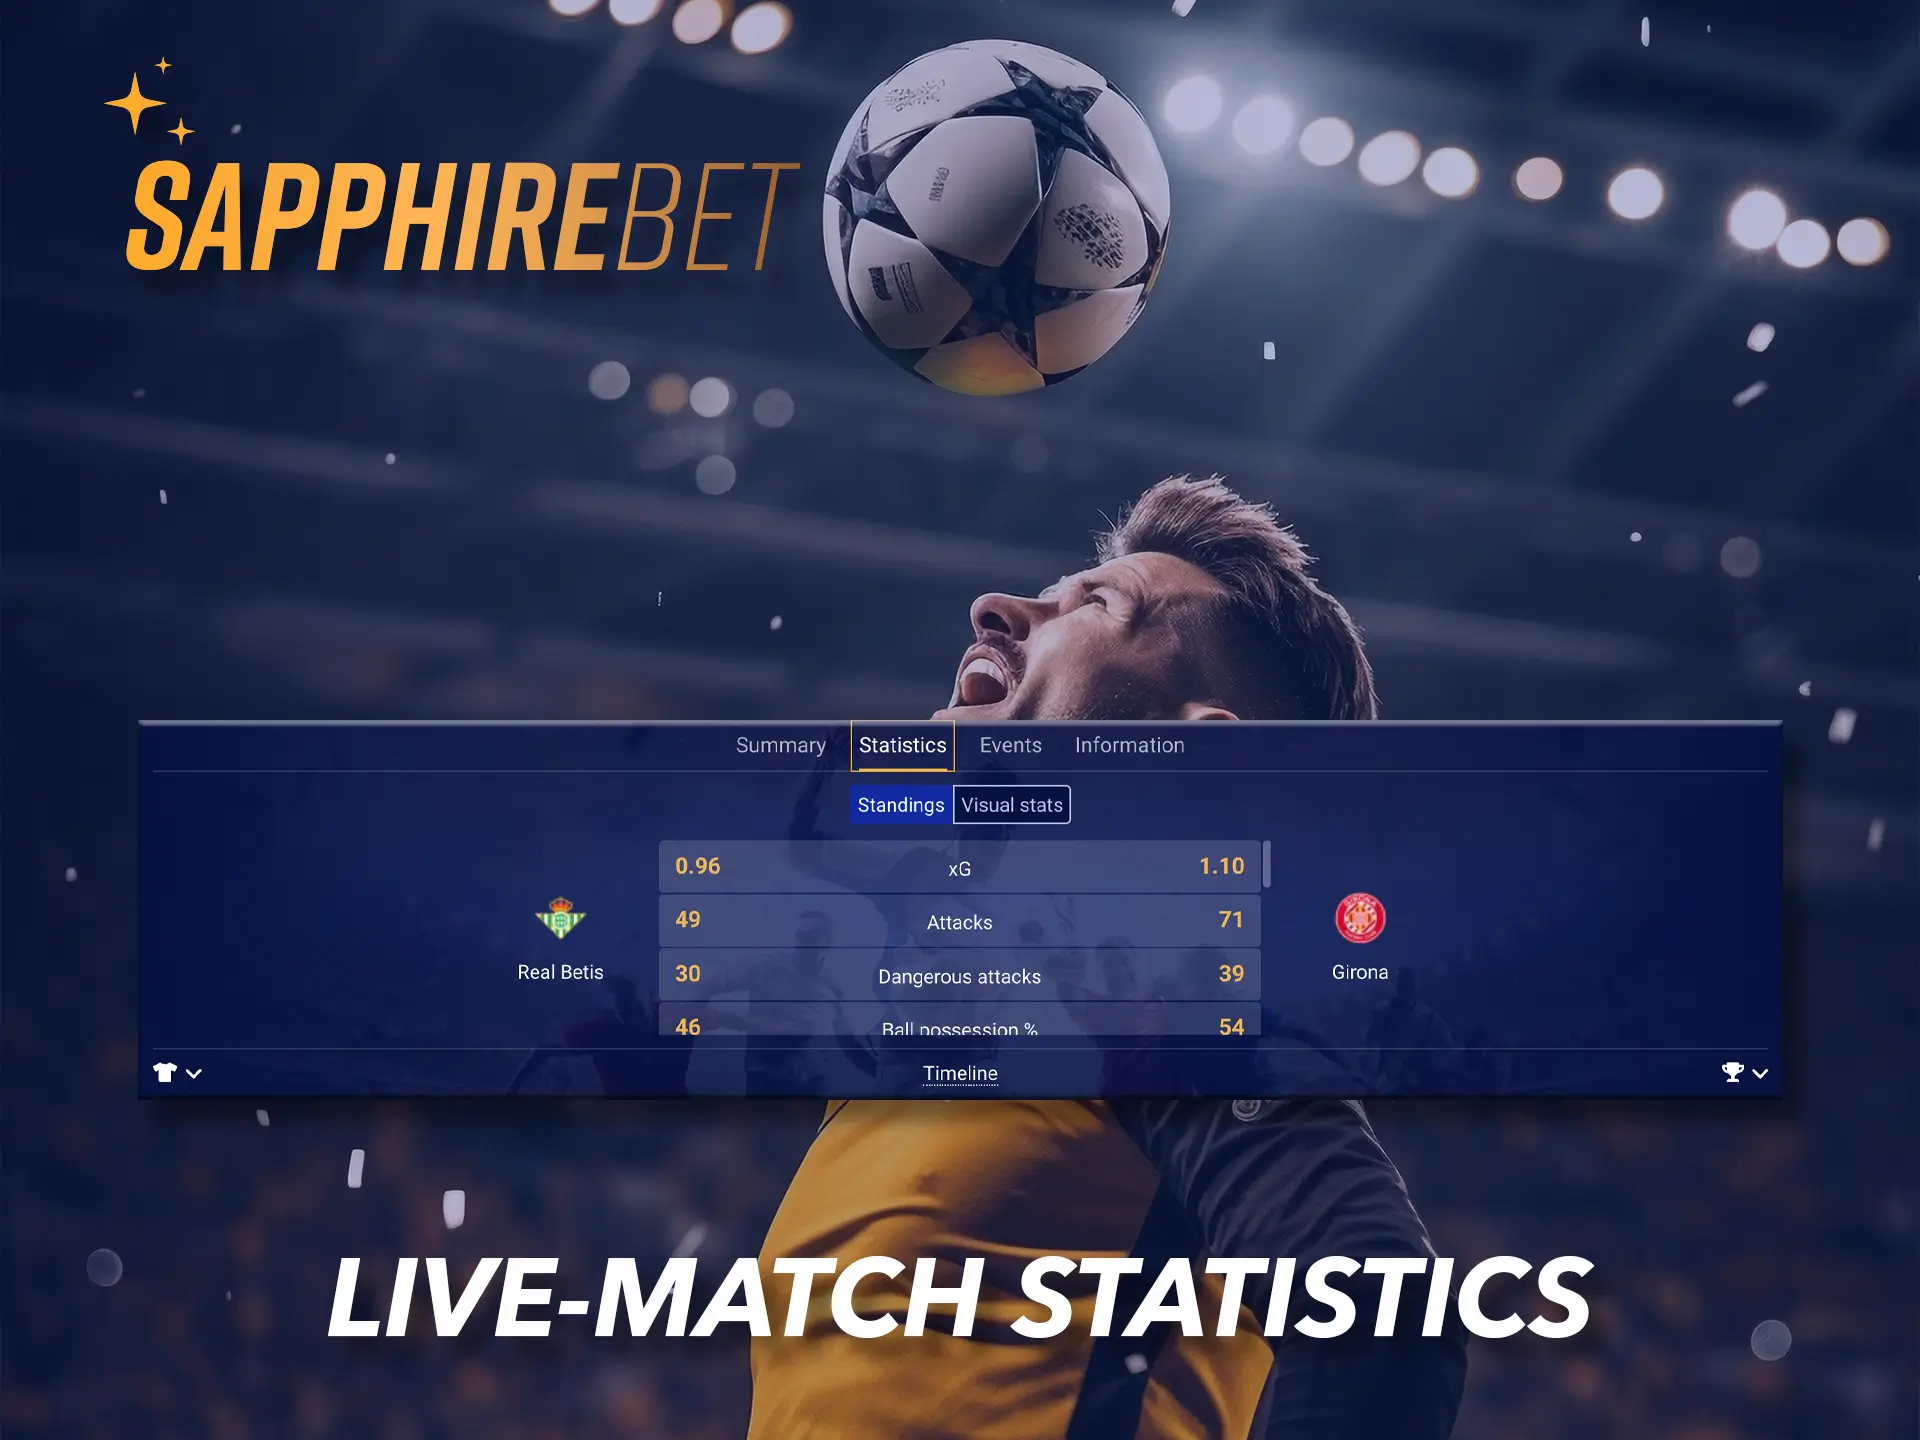 Follow the match statistics at Sapphirebet and make correct predictions.